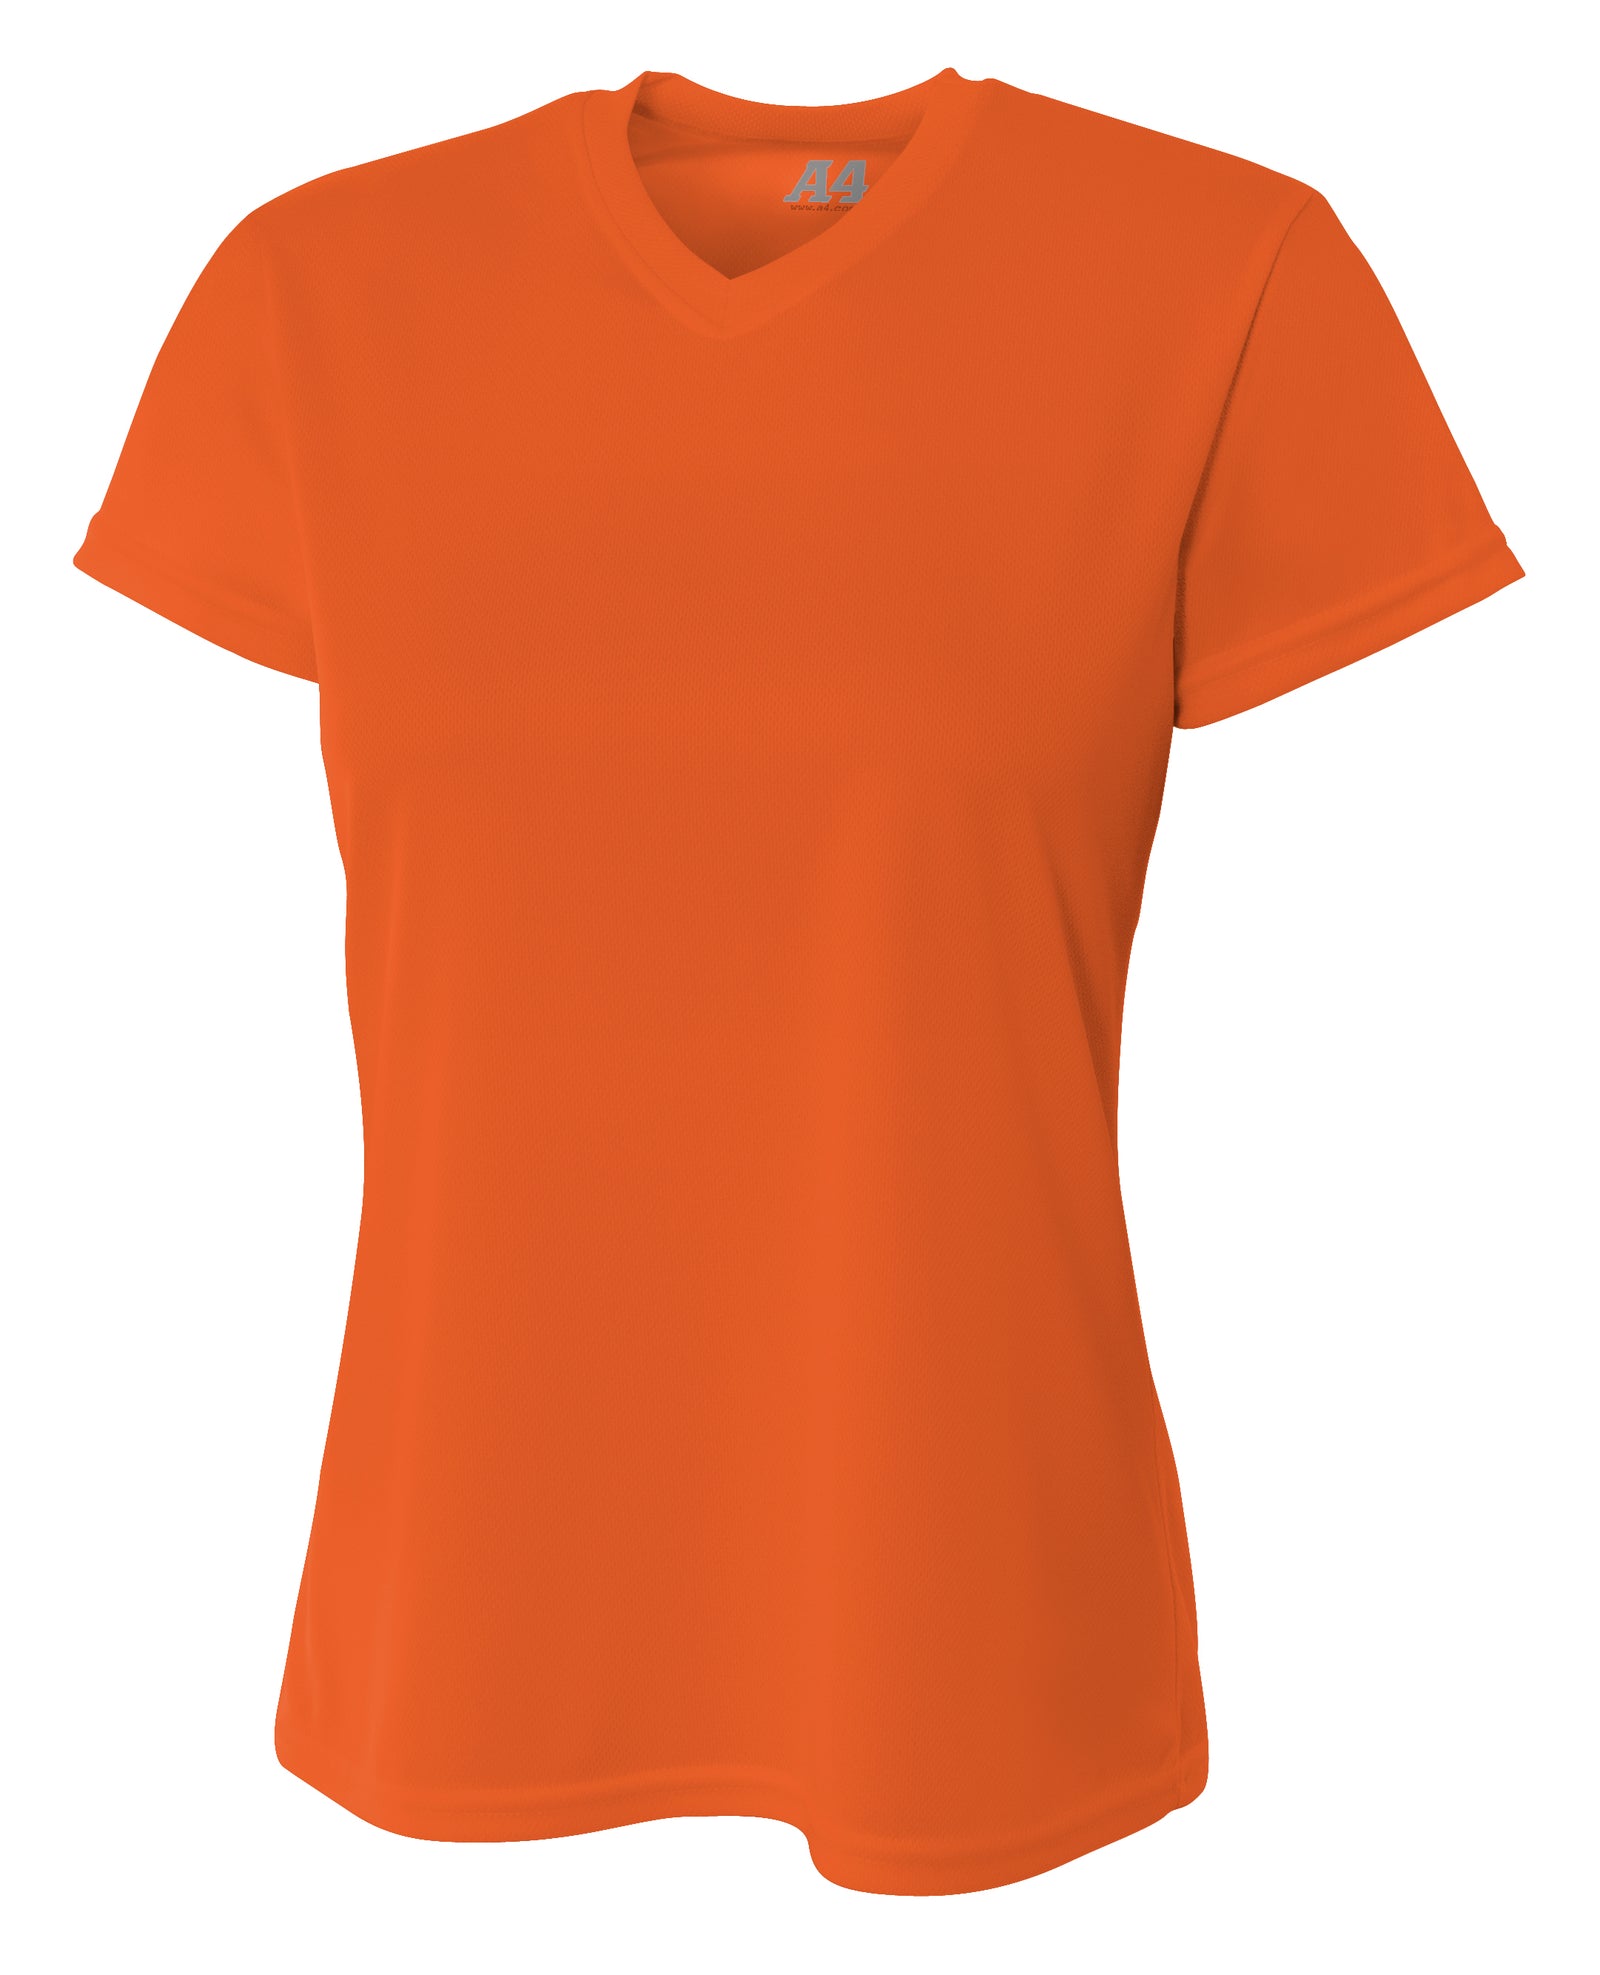 Athletic Orange A4 Short Sleeve V-neck Bird's Eye Mesh Tee